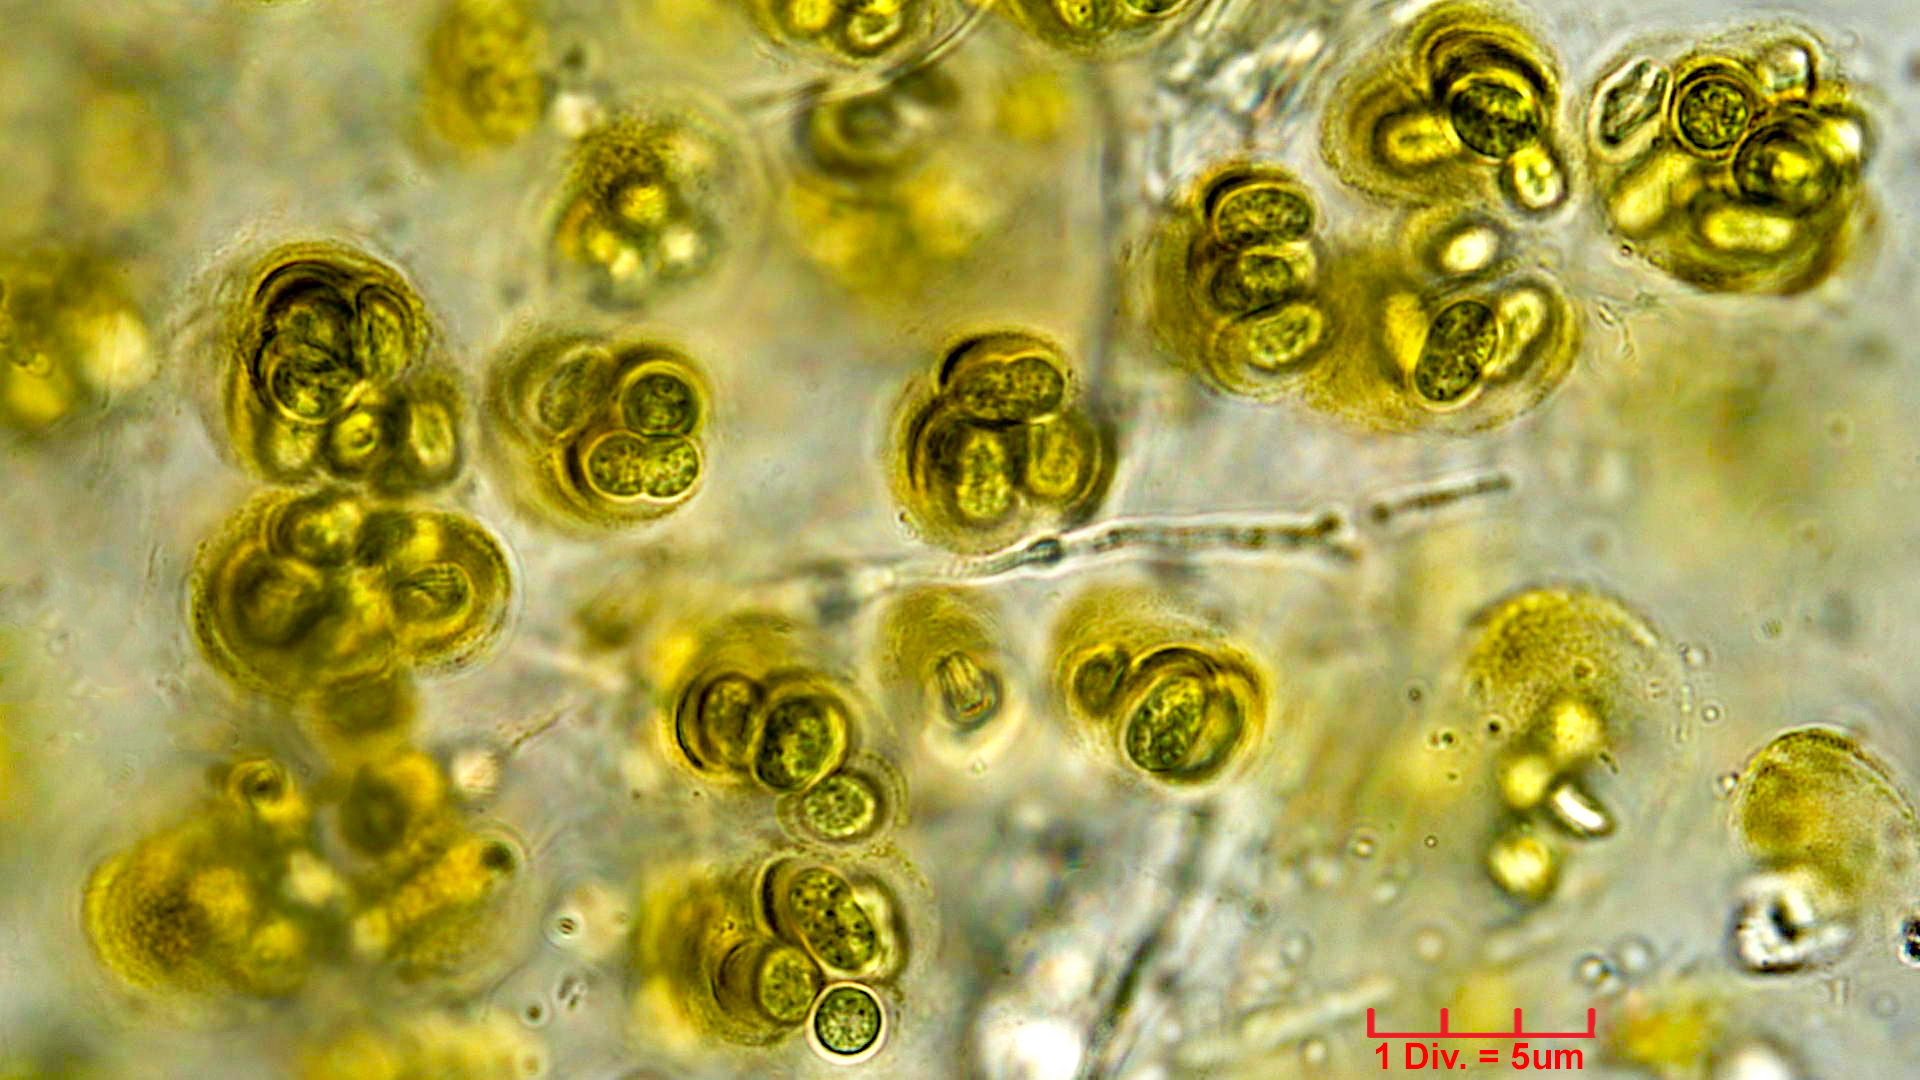 Cyanobacteria/Chroococcales/Aphanothecaceae/Gloeothece/fusco-lutea/gloeothece-fusco-lutea-14.jpg